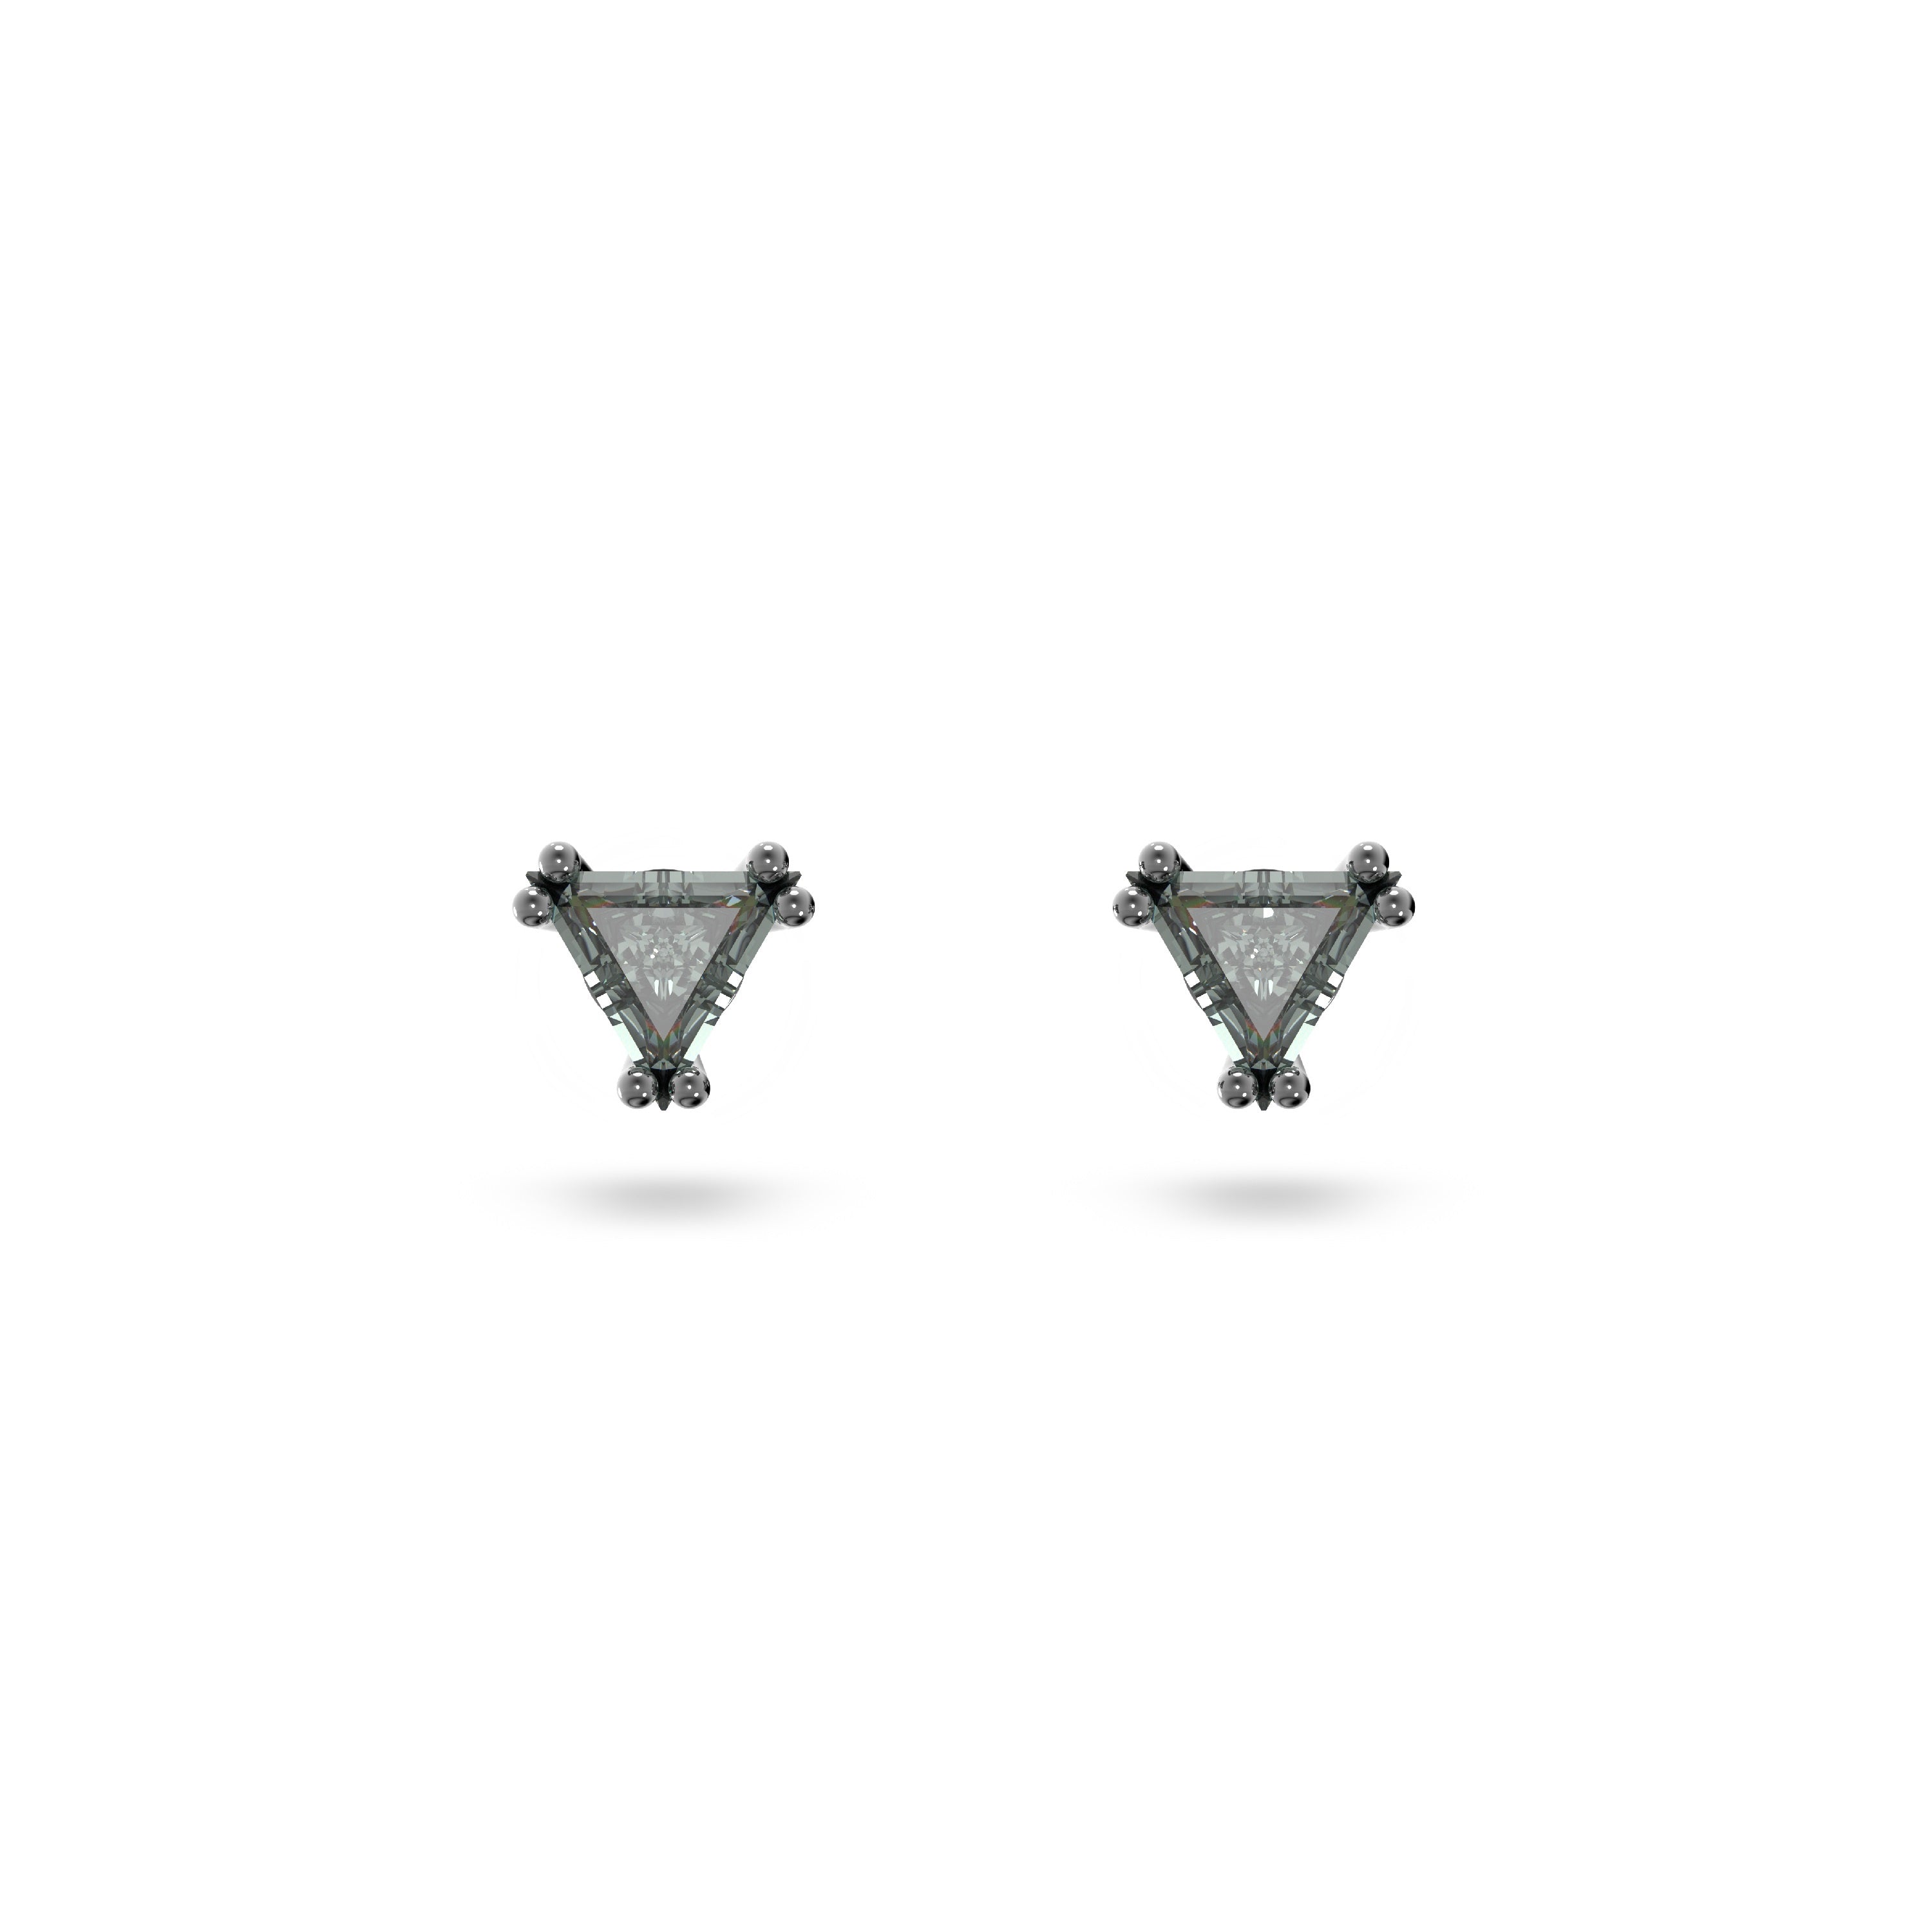 Swarovski Ruthenium Stilla Triangle Cut Black Earrings